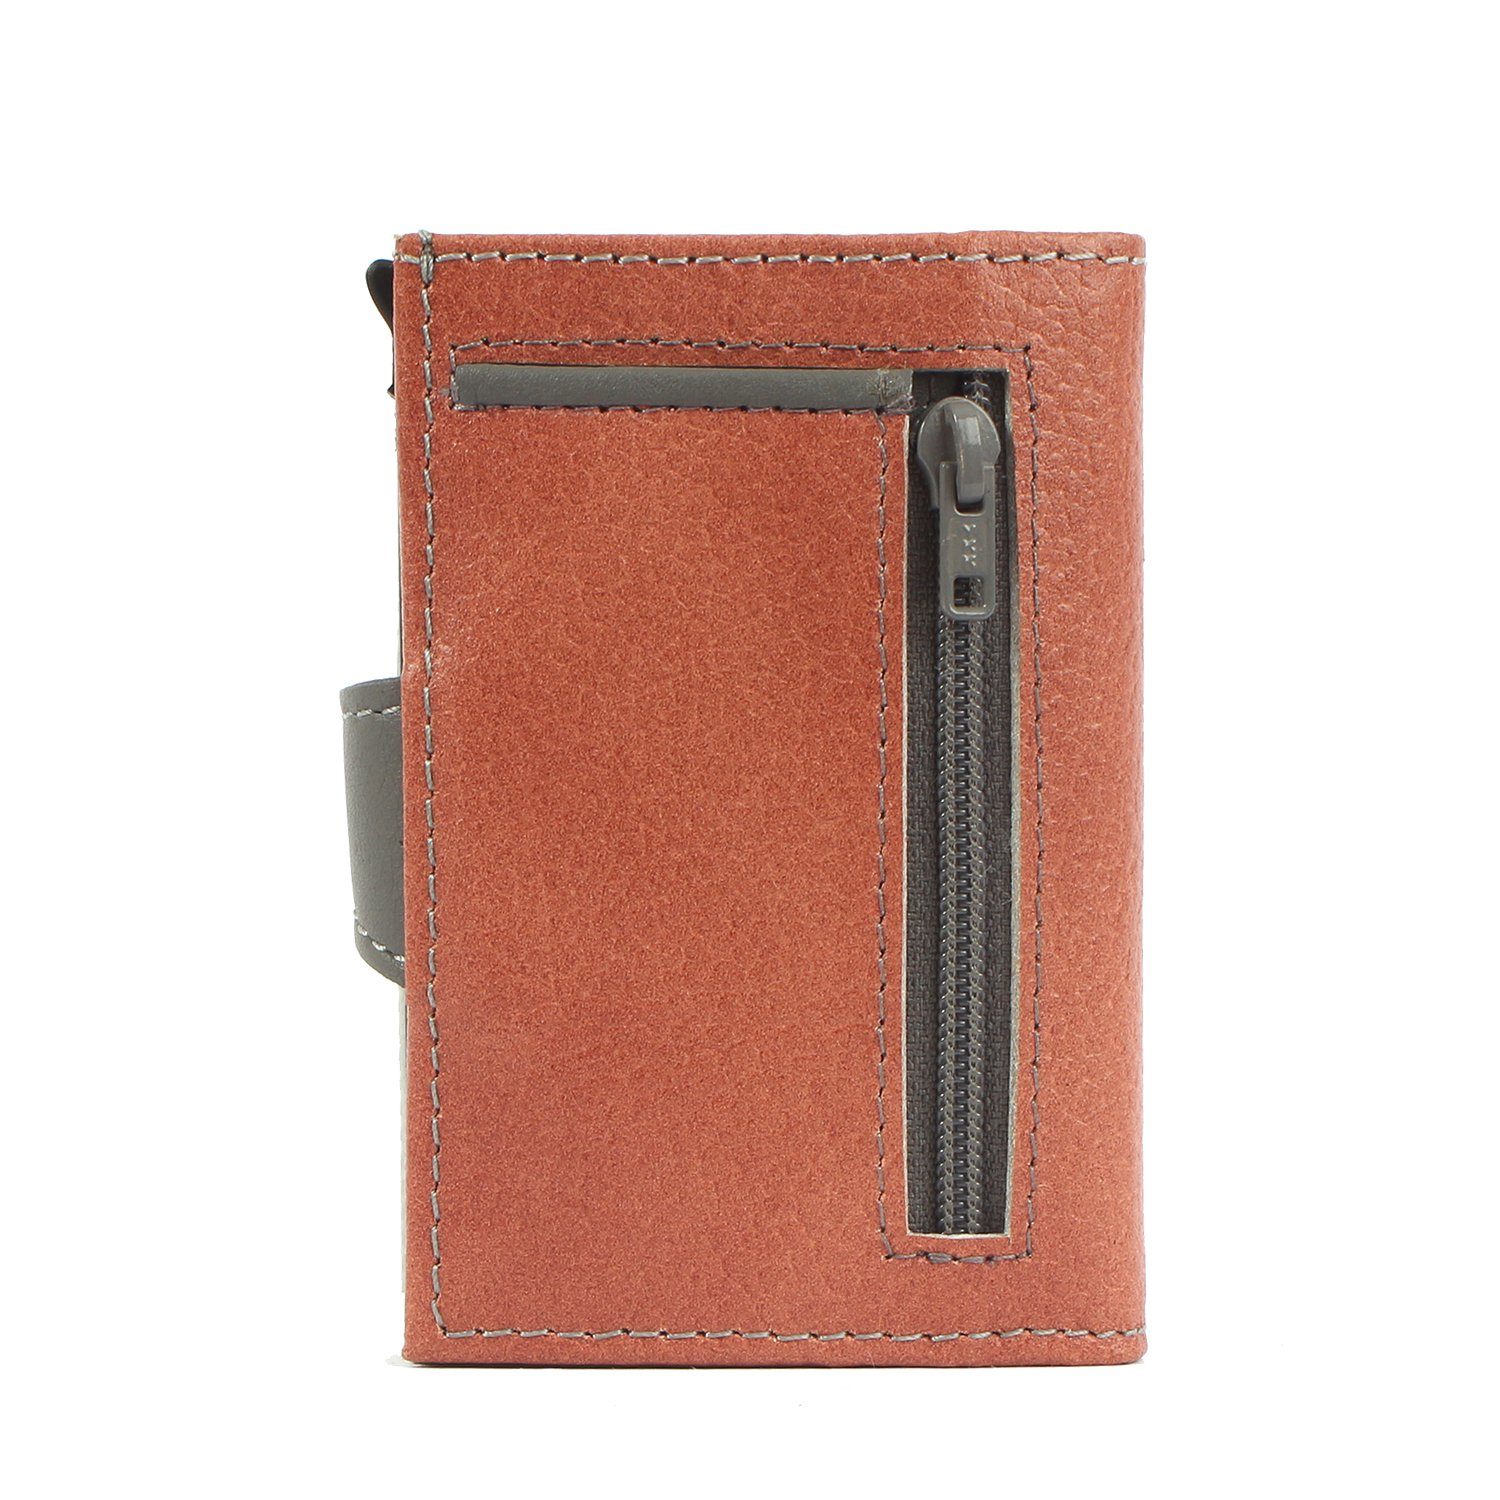 Margelisch Mini single Leder salmon Geldbörse leather, aus Kreditkartenbörse Upcycling noonyu